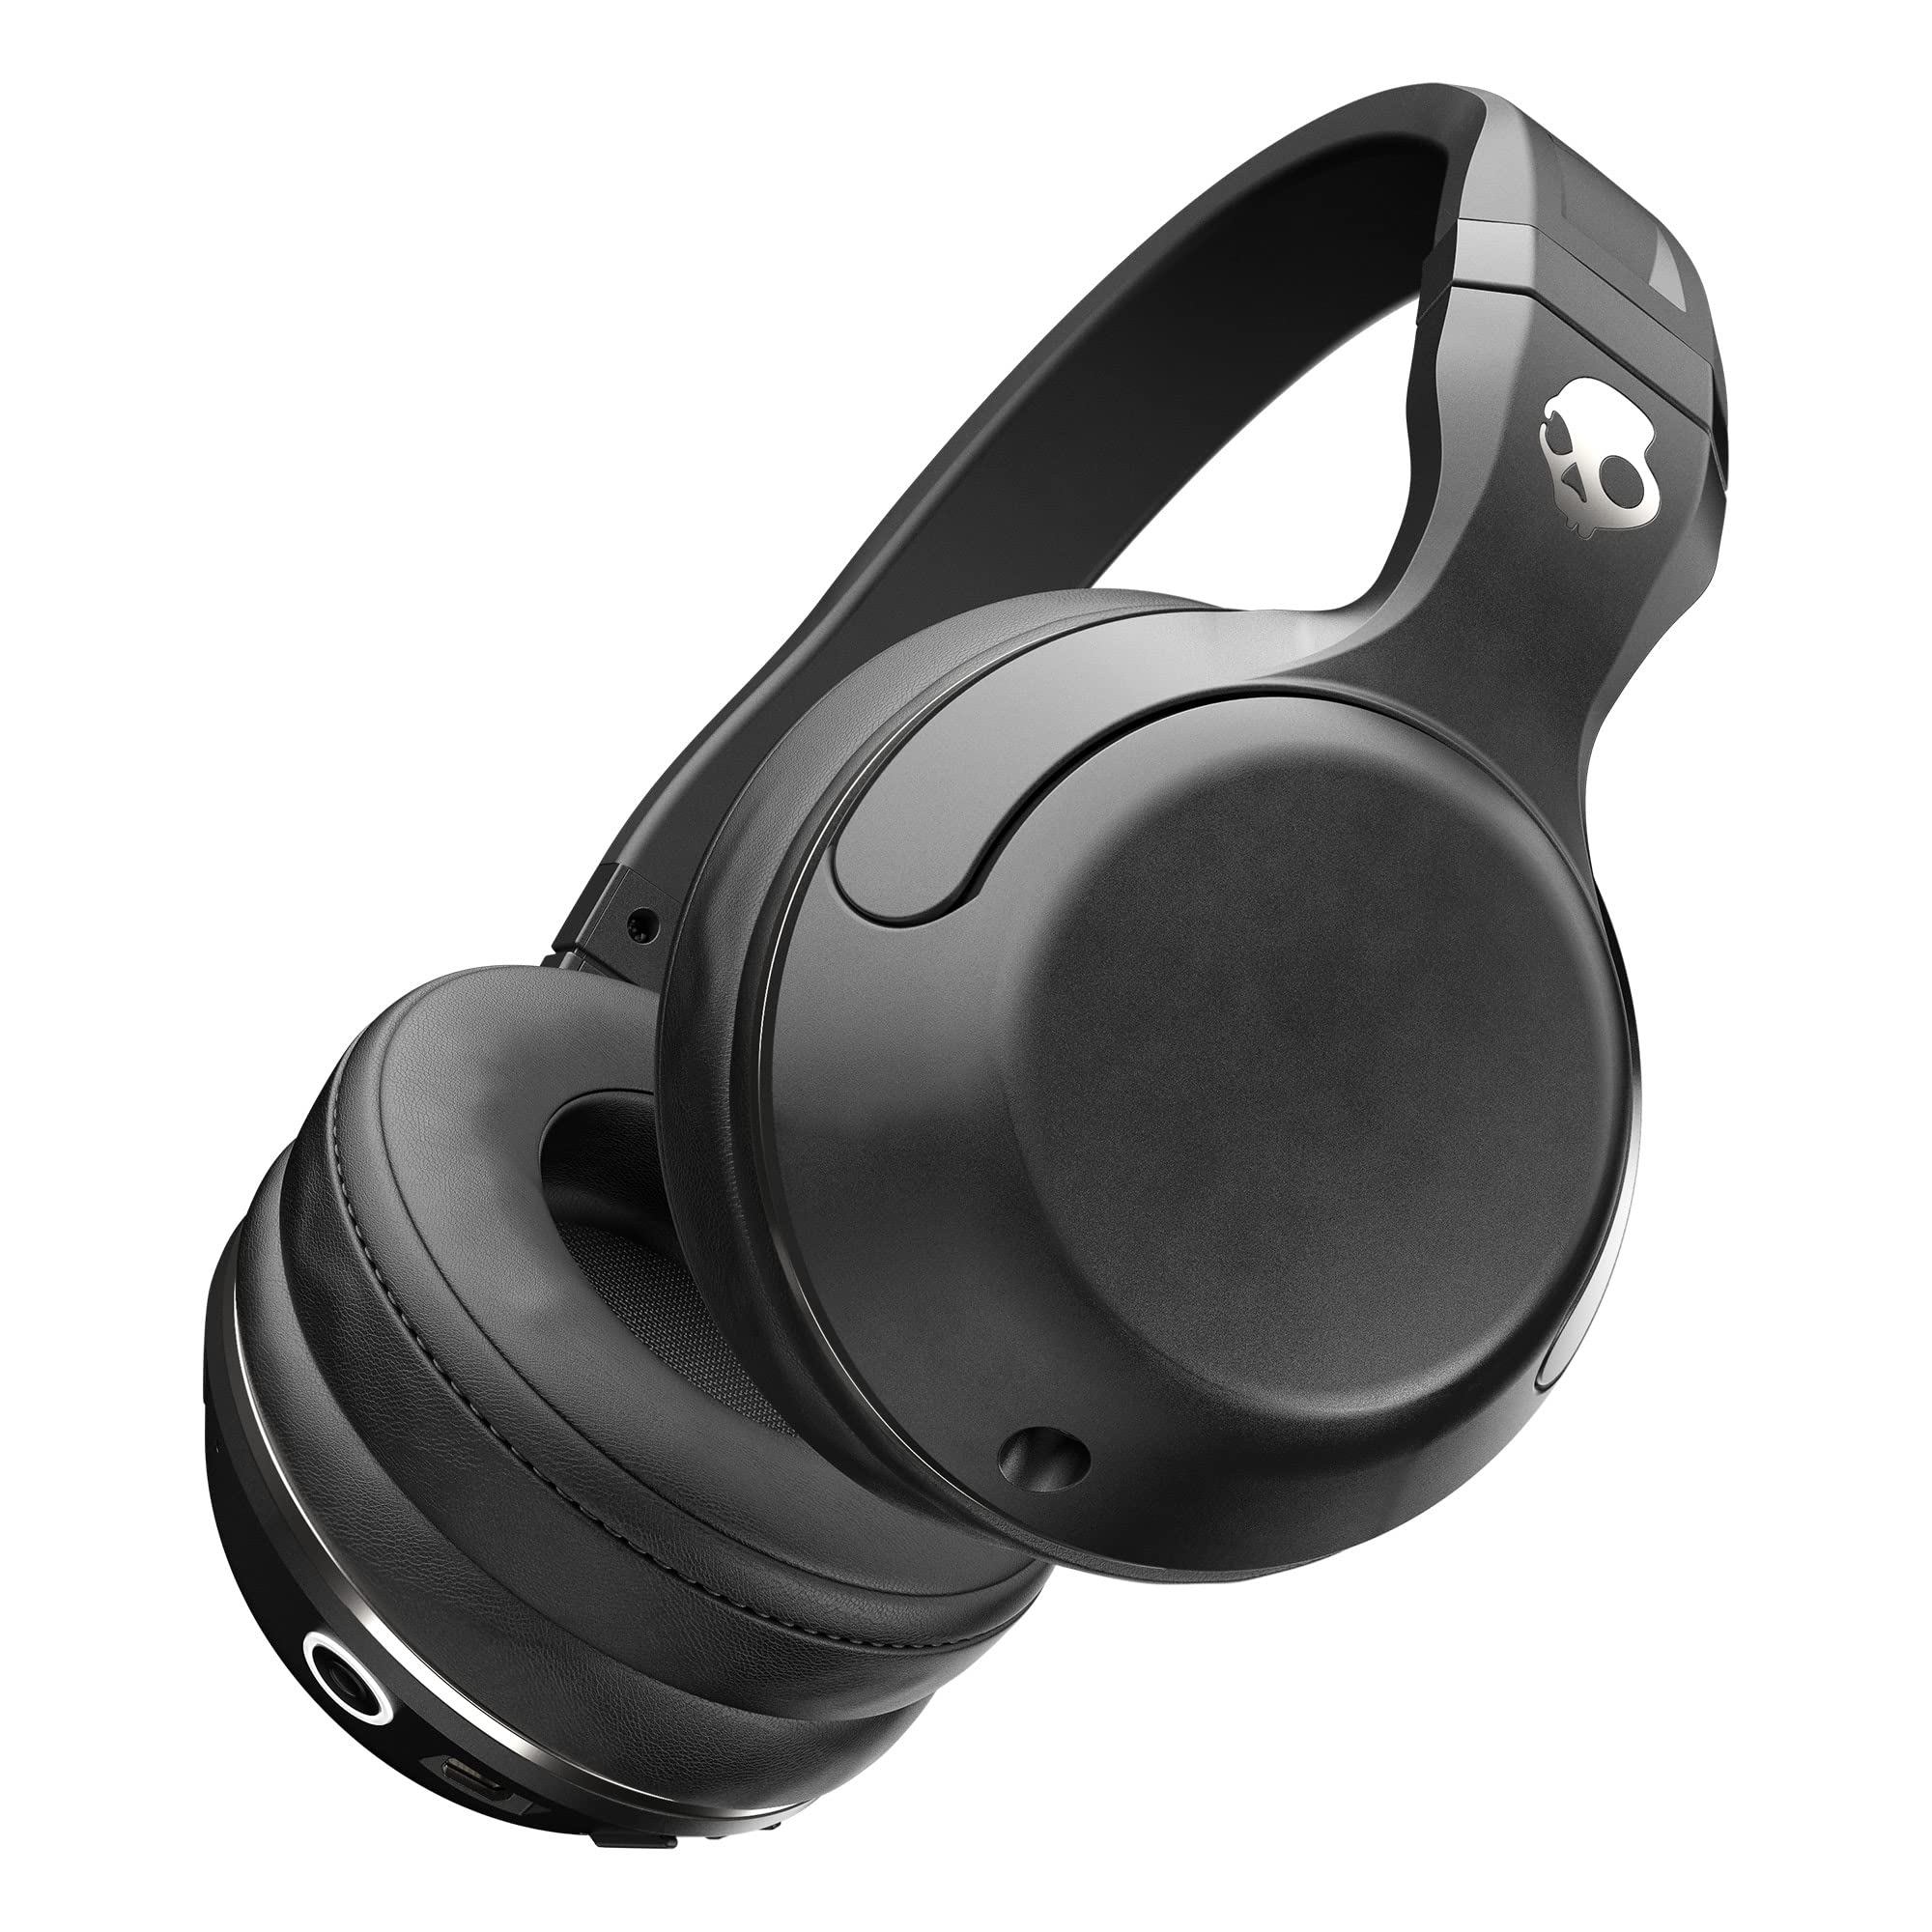 Skullcandy Hesh 2 无线包耳式蓝牙耳机，适用于 iPhone 和 Android，带麦克风 / 电池续航时间 15 小时 / 非常适合音乐、学校、锻炼、旅行和游戏 - 黑色